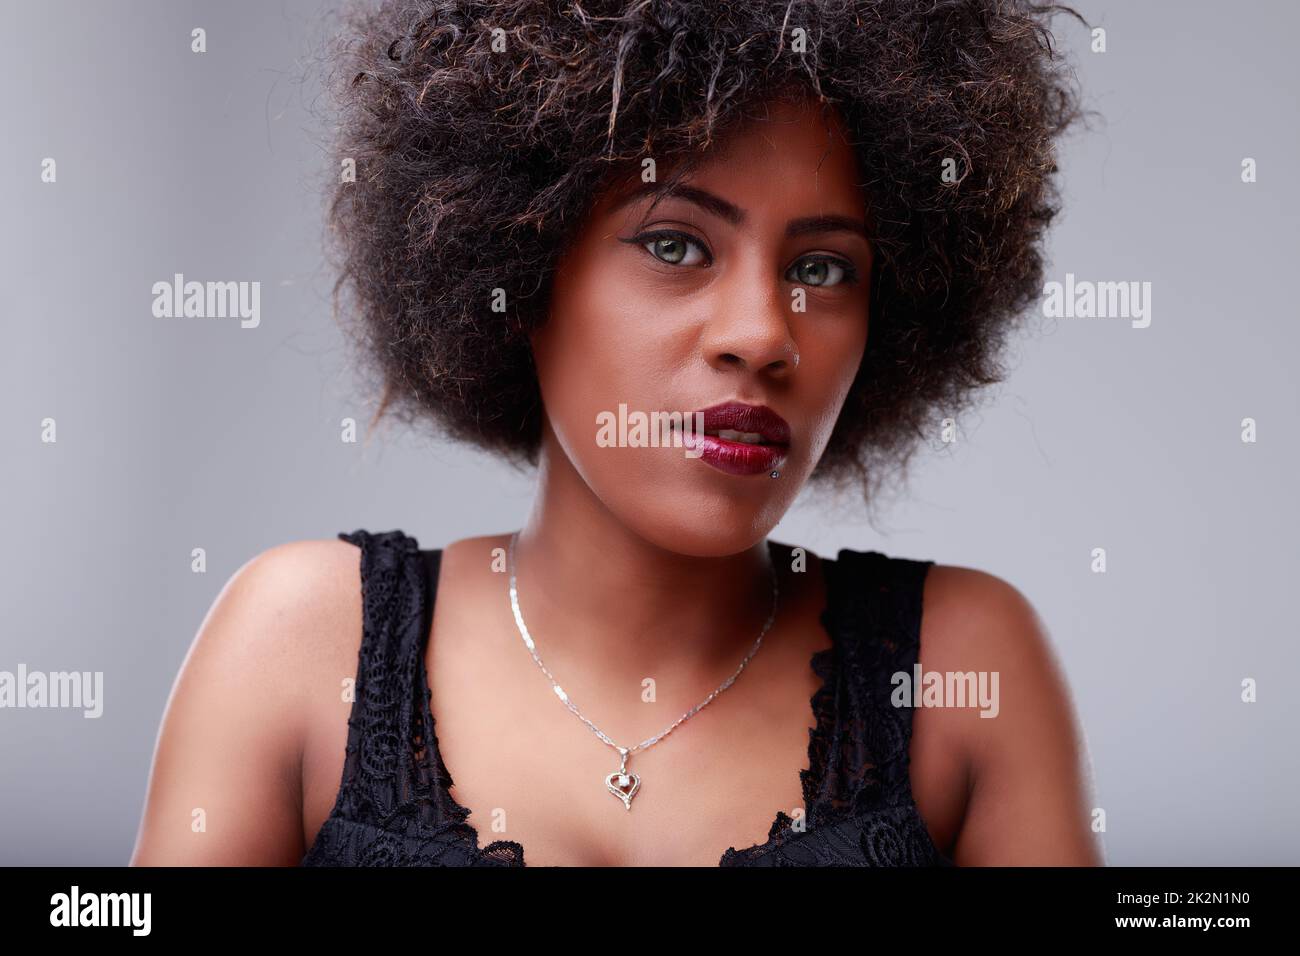 Young black woman with beautiful grey eyes looking at camera Stock Photo